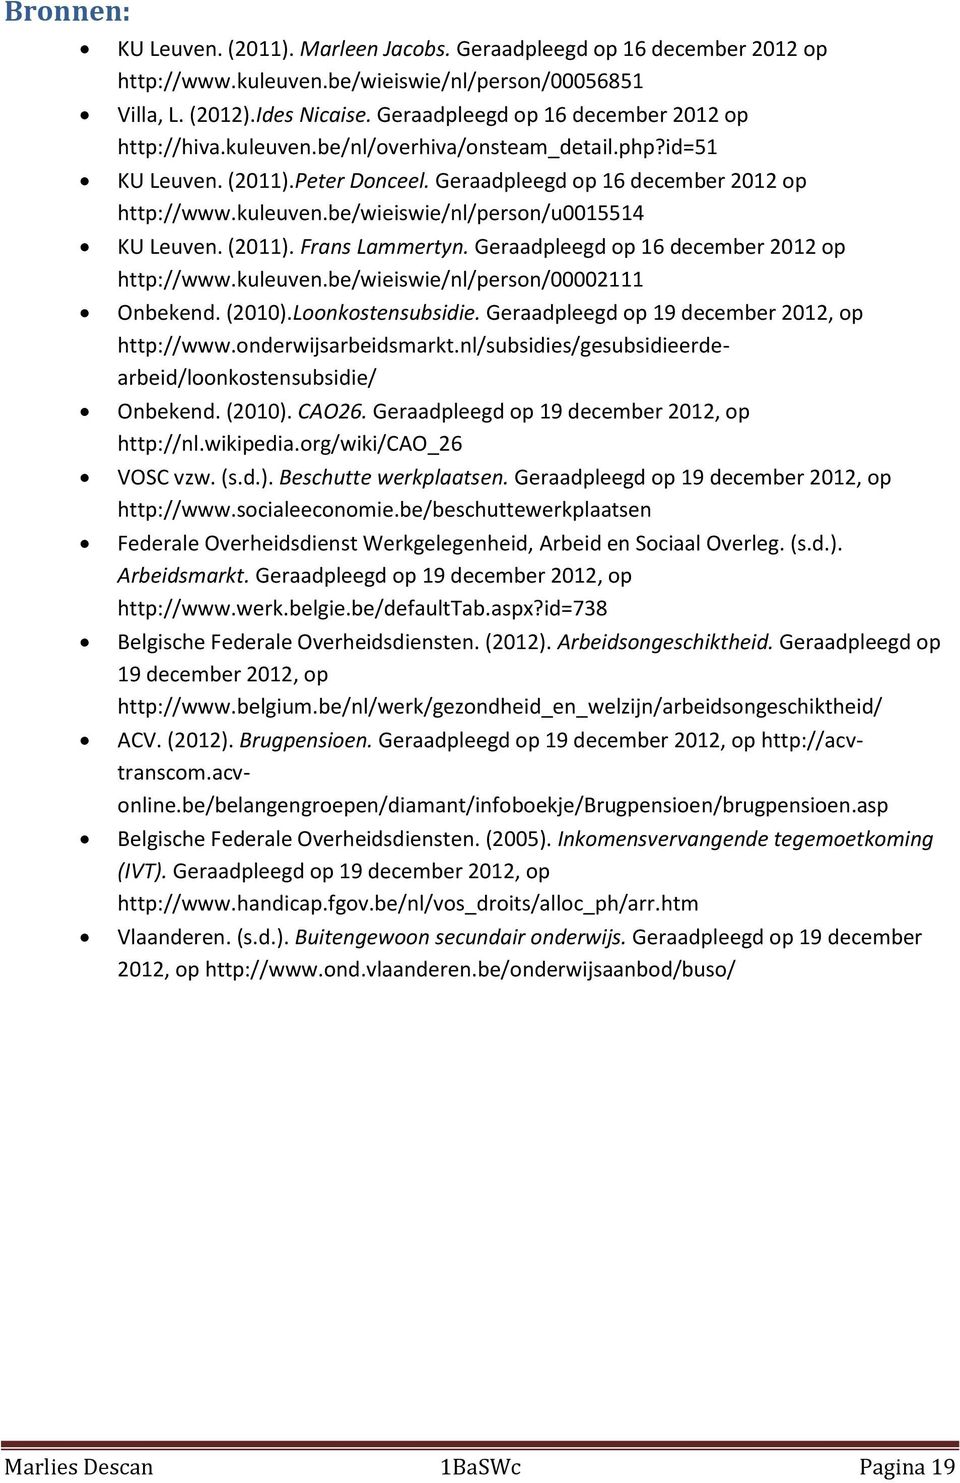 (2011). Frans Lammertyn. Geraadpleegd op 16 december 2012 op http://www.kuleuven.be/wieiswie/nl/person/00002111 Onbekend. (2010).Loonkostensubsidie. Geraadpleegd op 19 december 2012, op http://www.